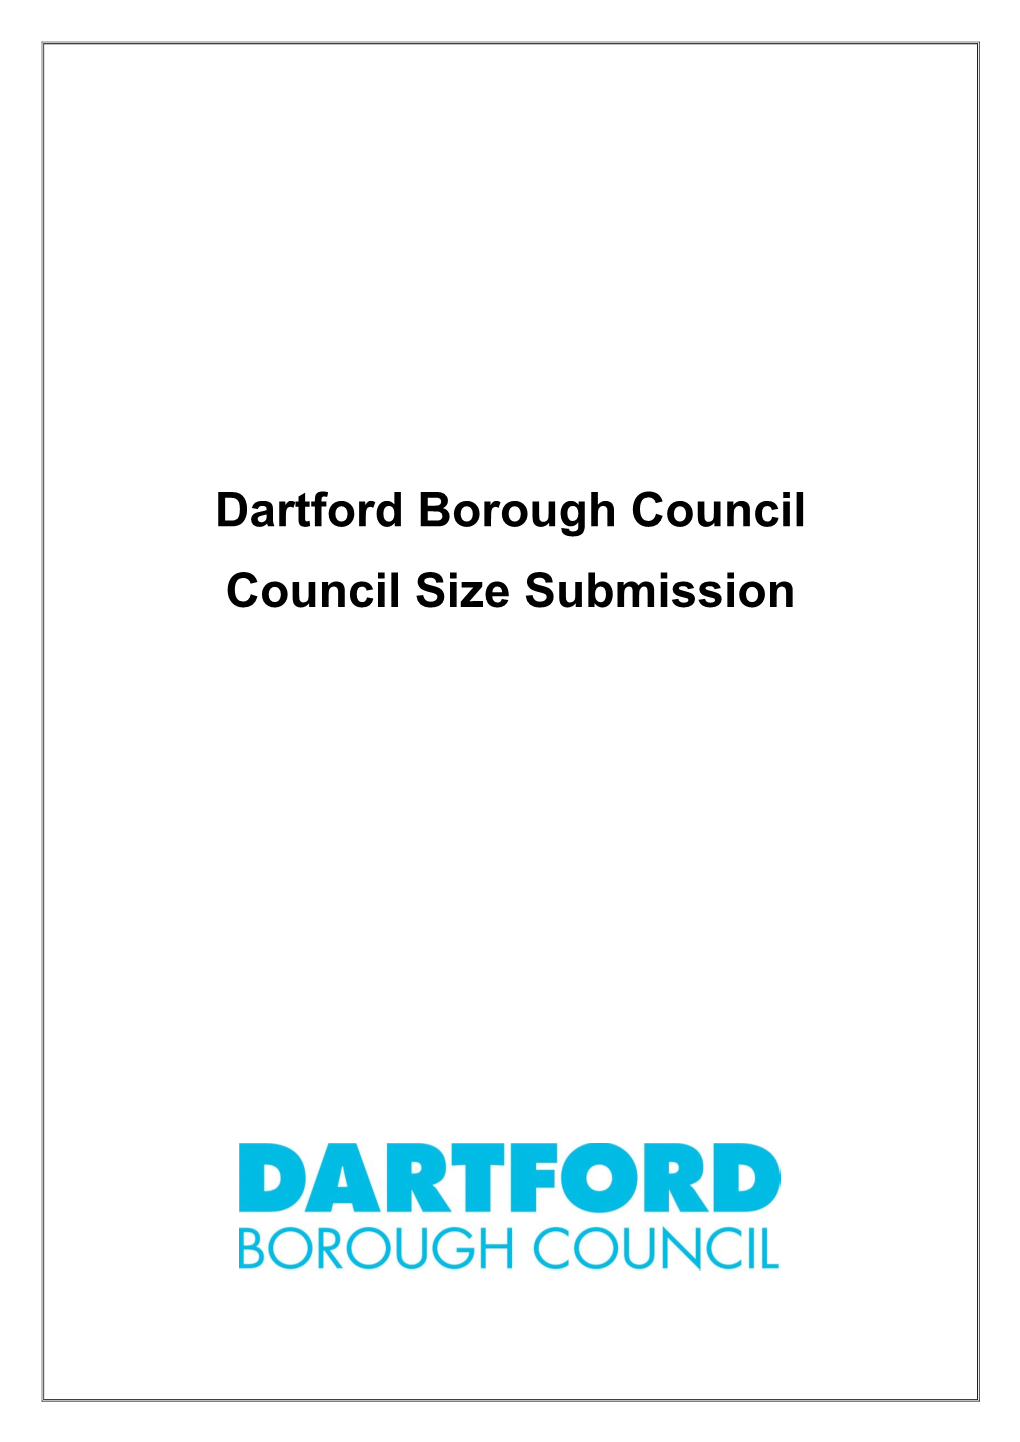 Dartford Borough Council Council Size Submission